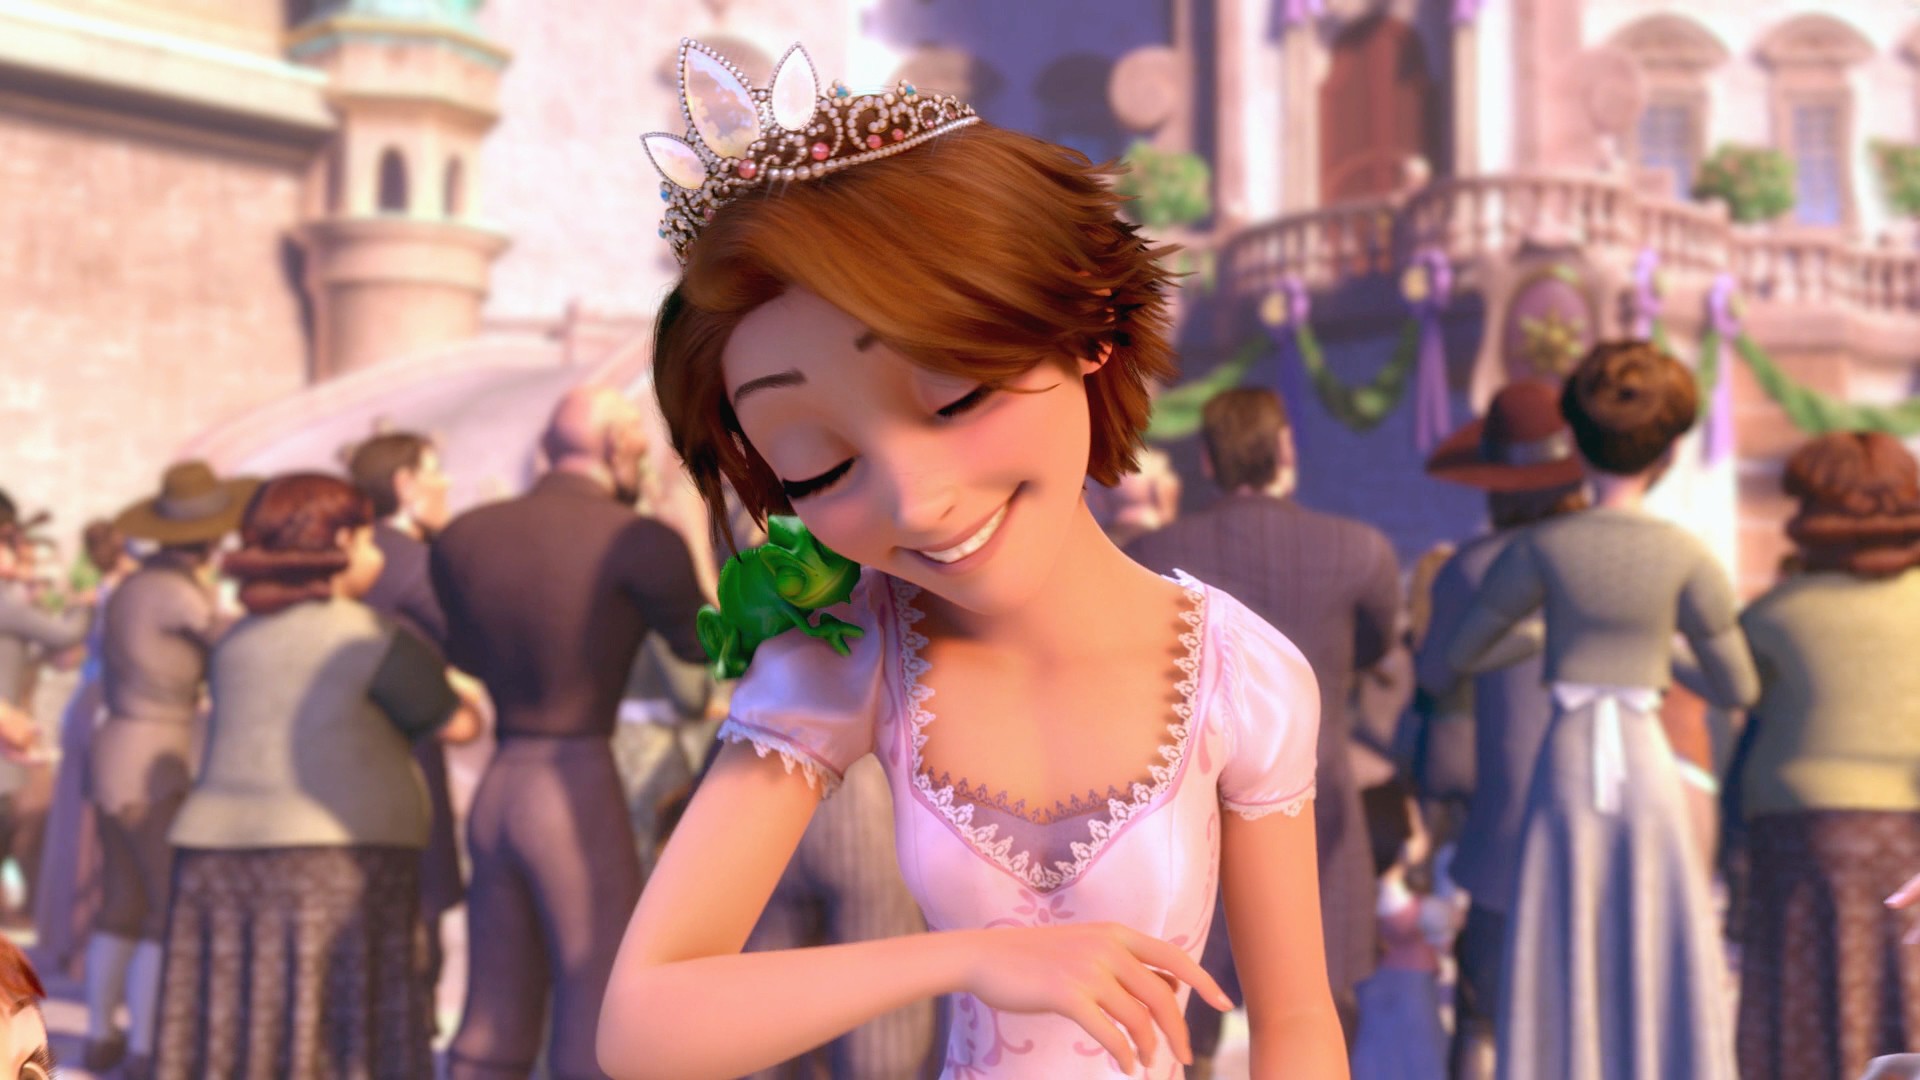 General 1920x1080 Rapunzel Disney Tangled Disney princesses movies animated movies fantasy girl film stills smiling princess crown